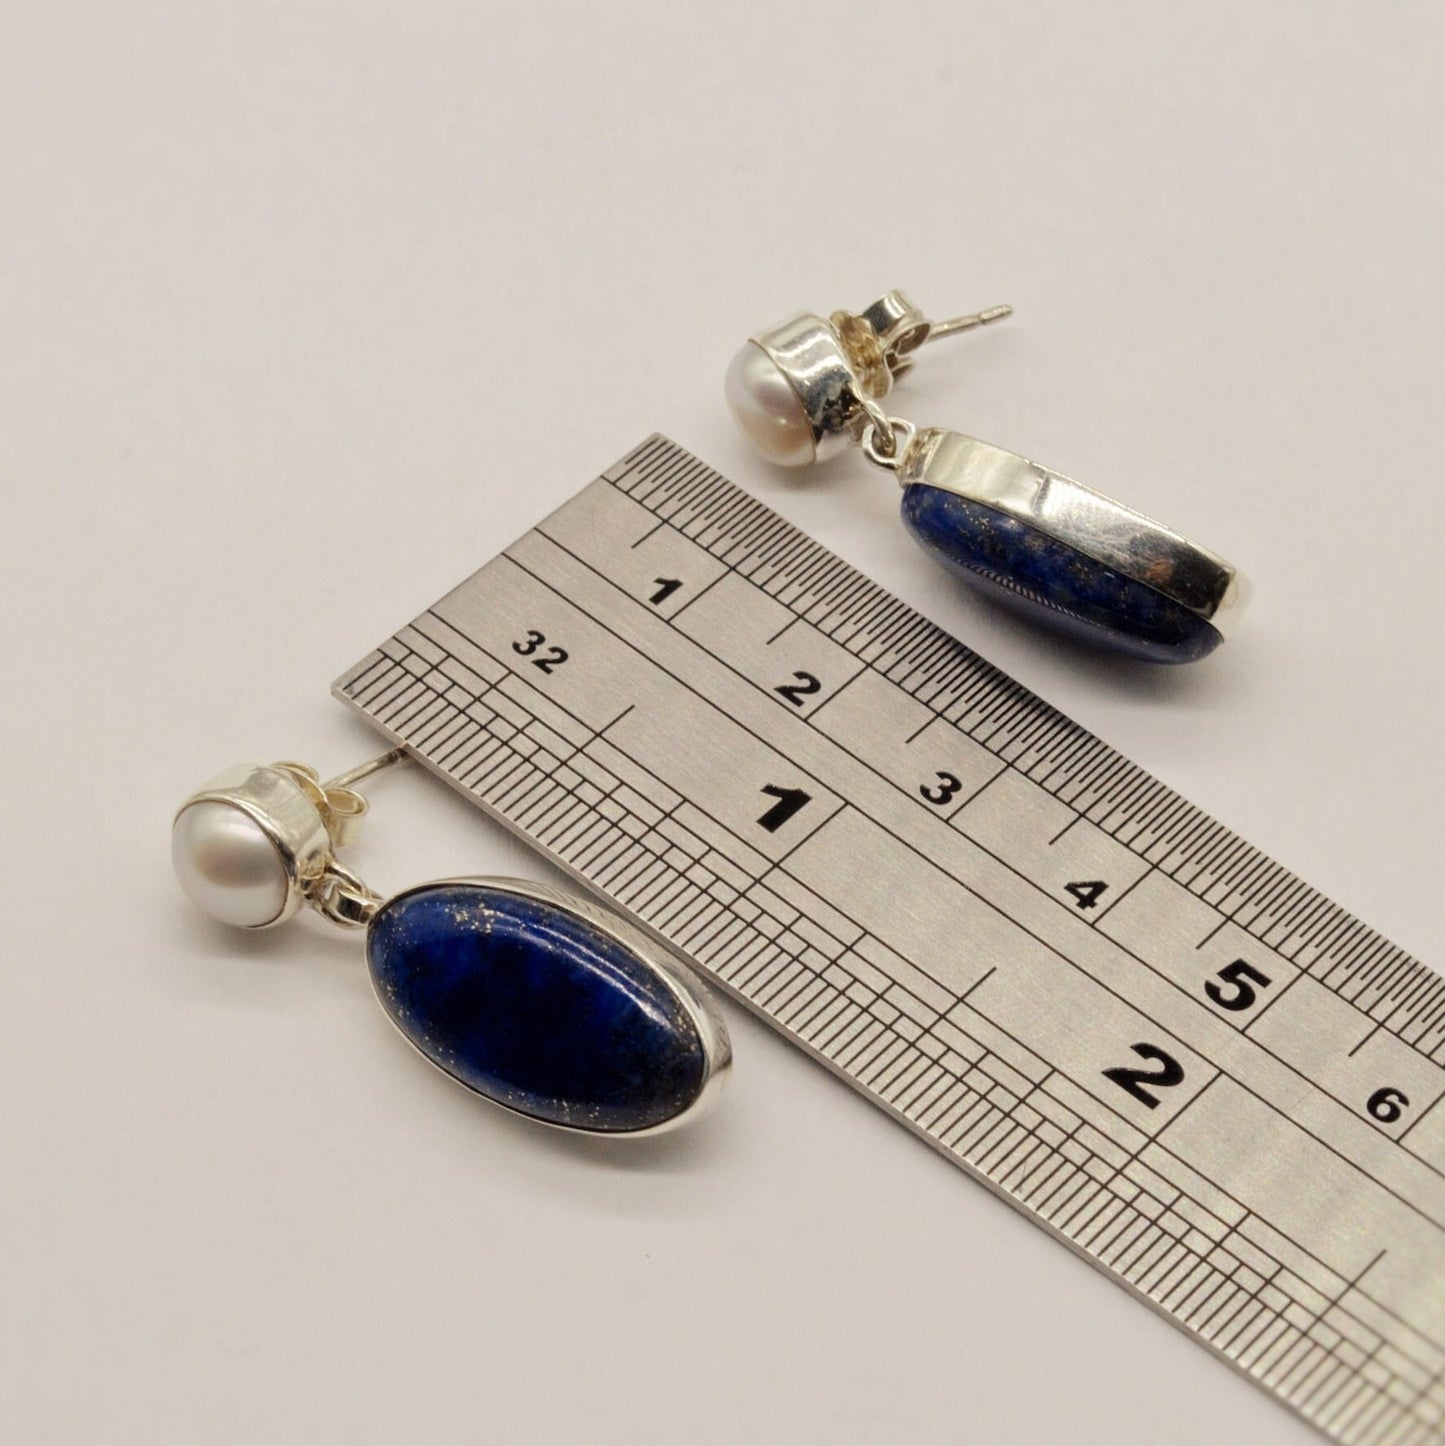 Lapis Lazuli Sterling Silver Earrings, Pearl Earrings, Handmade Blue Earrings, Gifts For Her, Women Gemstone Earrings, Birthday Gift